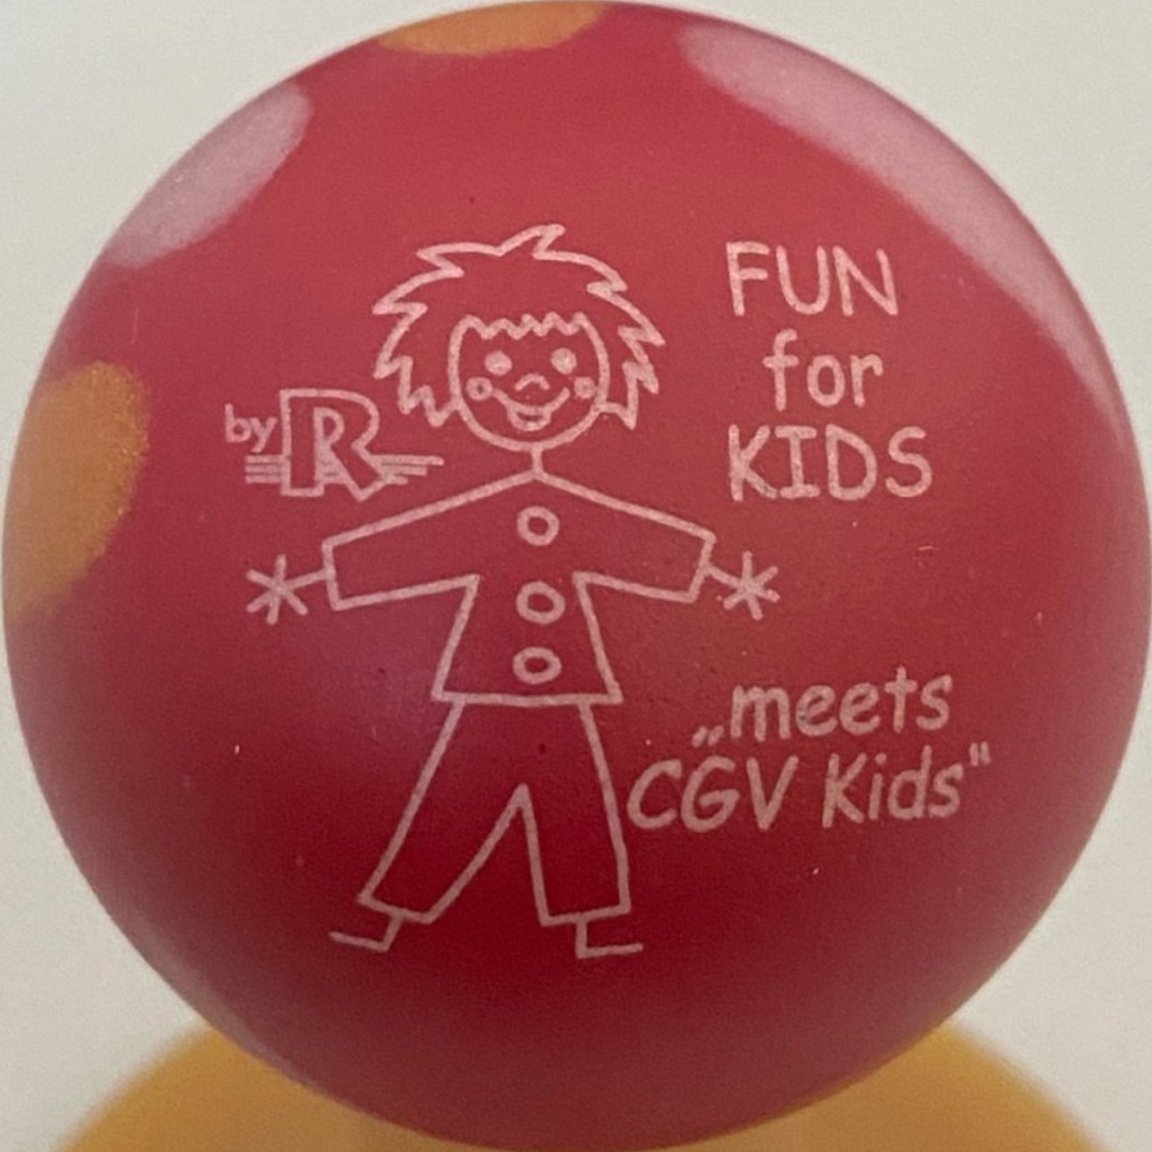 fun-for-kids_meets_cgv_kids_l.jpg